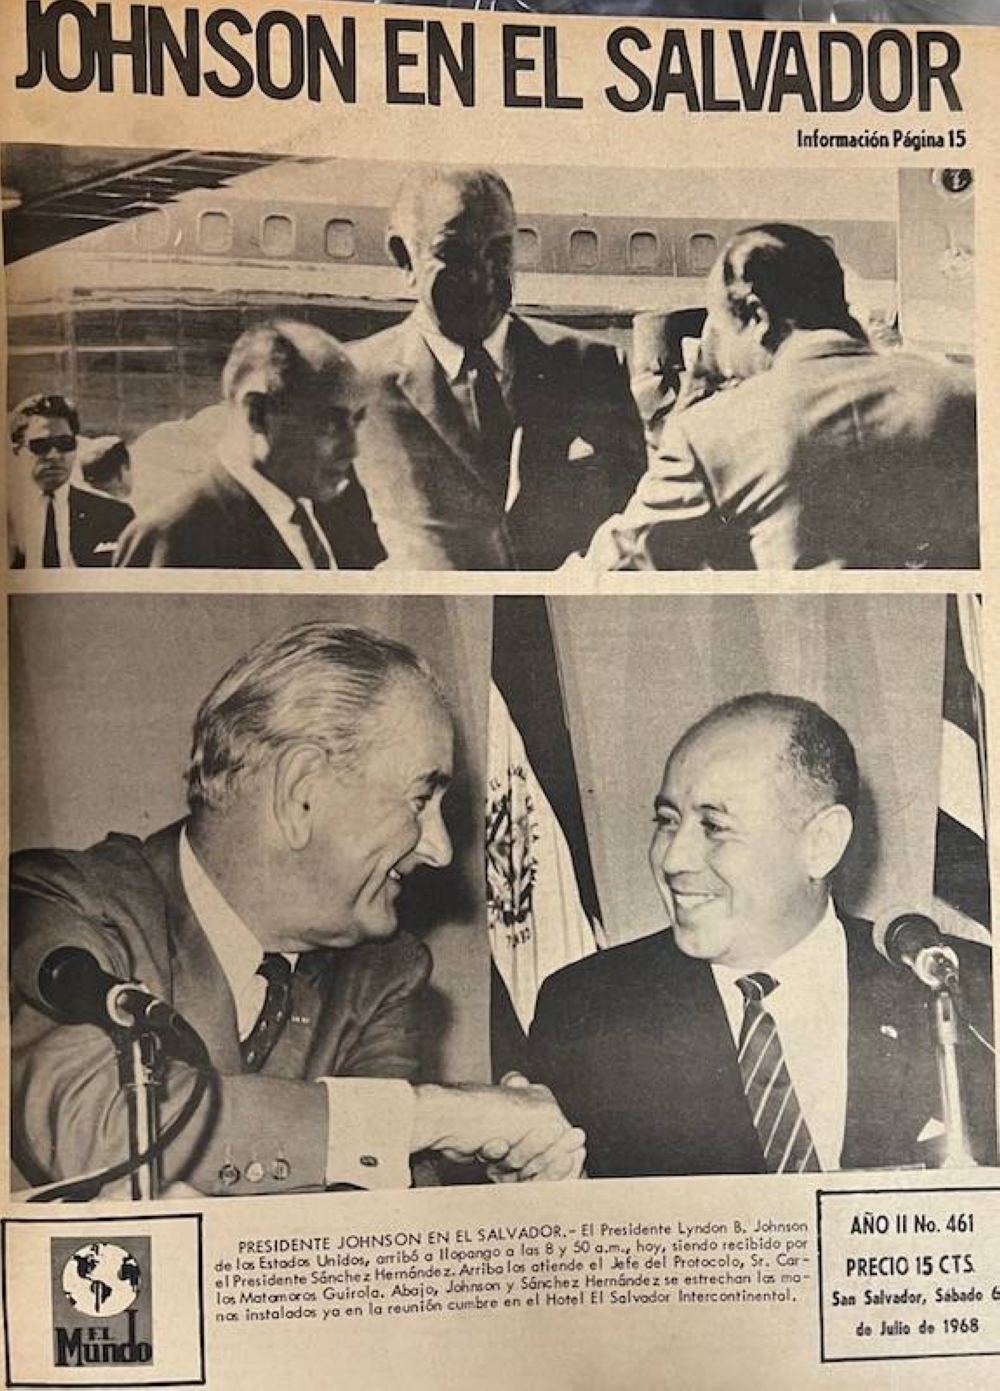 La portada de Diario El Mundo informa de la visita de Johnson.